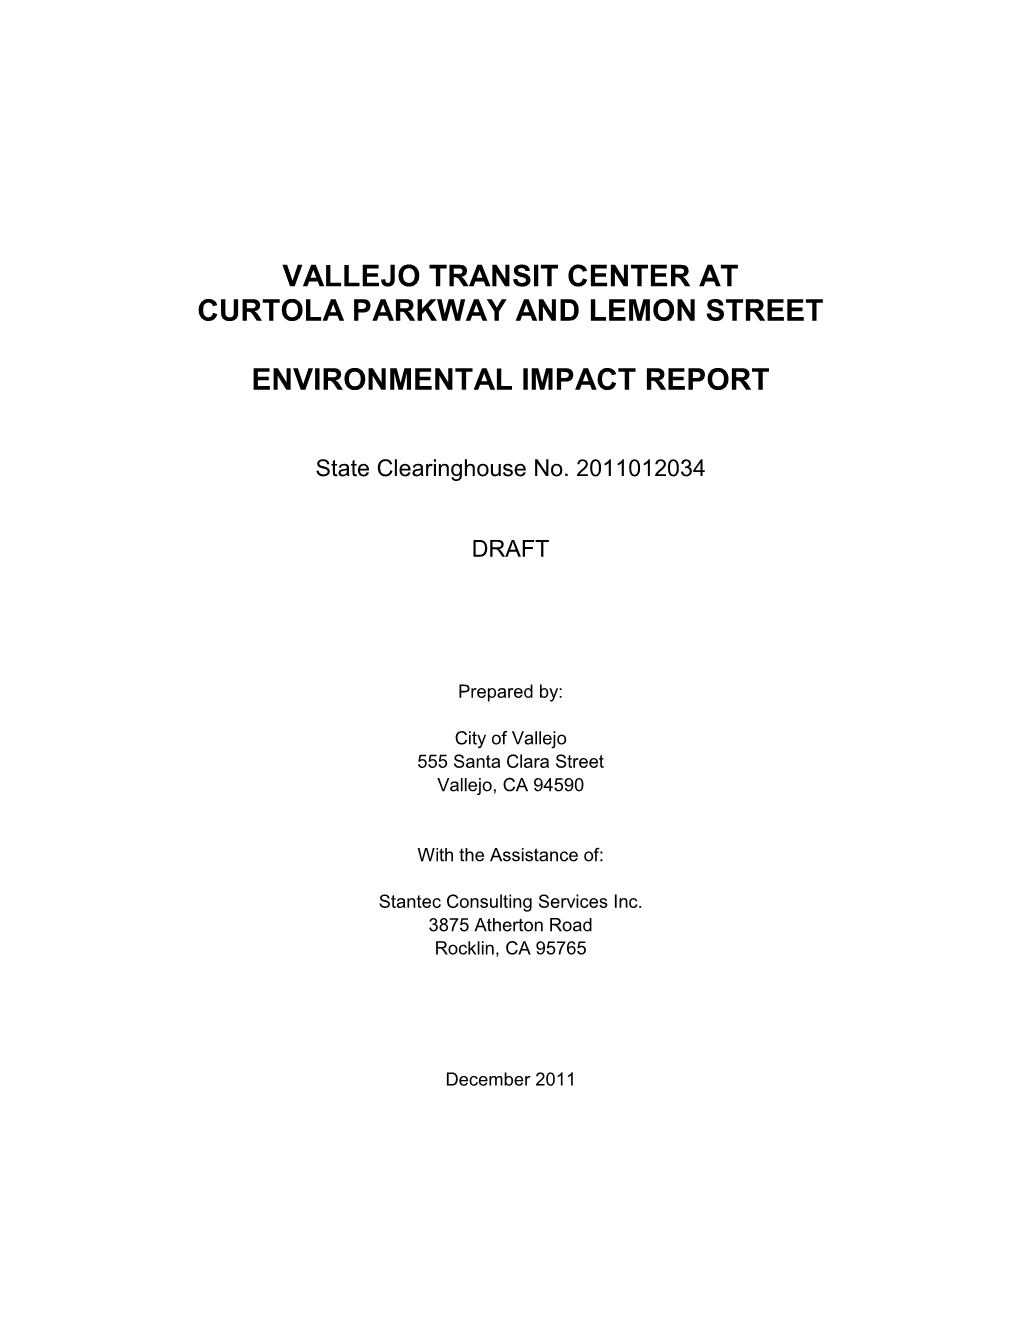 Vallejo Transit Center at Curtola Parkway and Lemon Street